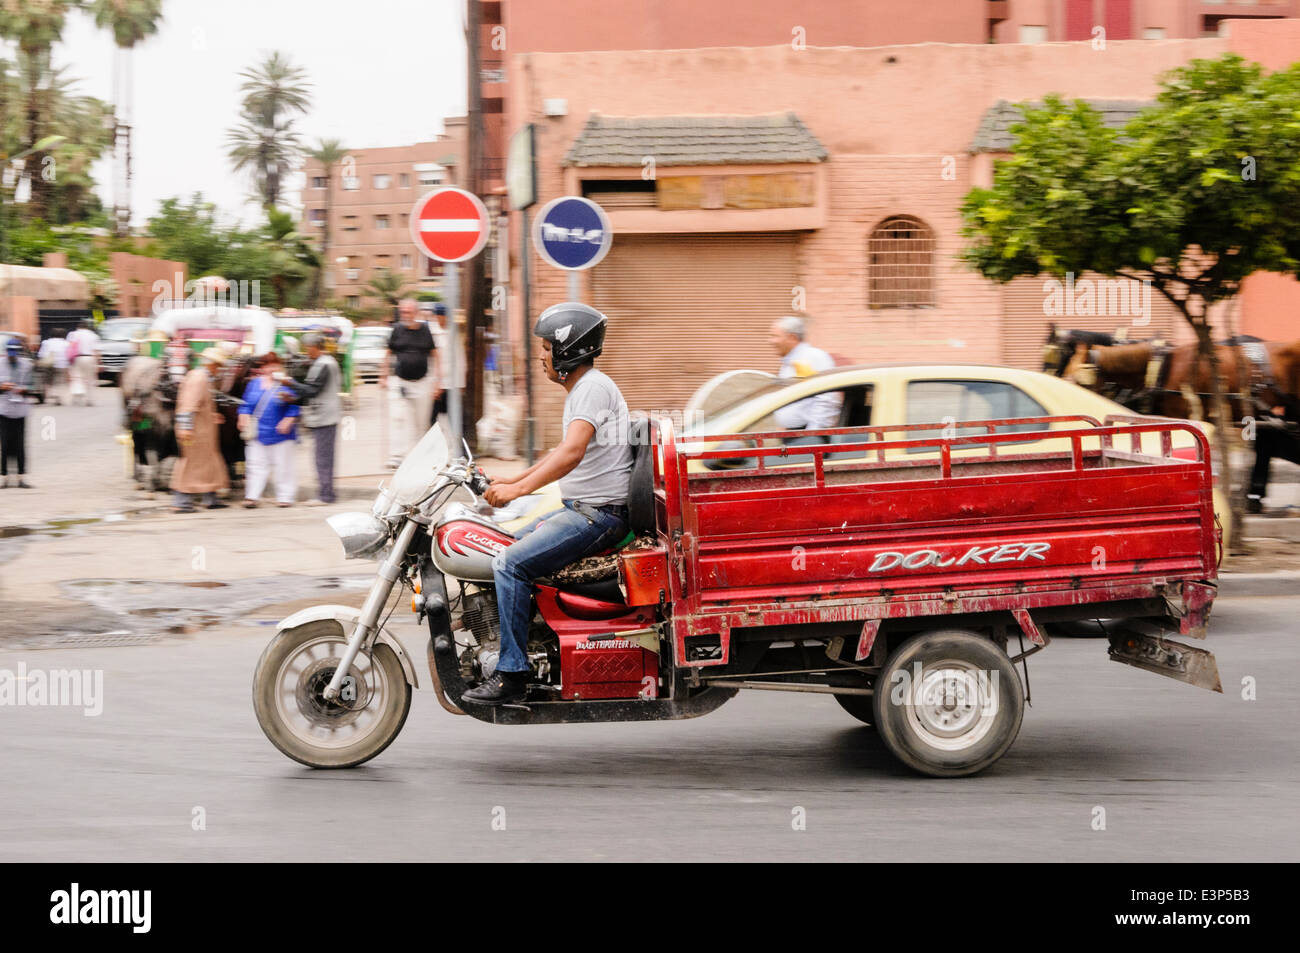 Motorrad angepasst mit einem Pick-up hinten billig Transport in Marrakesch,  Marokko Stockfotografie - Alamy